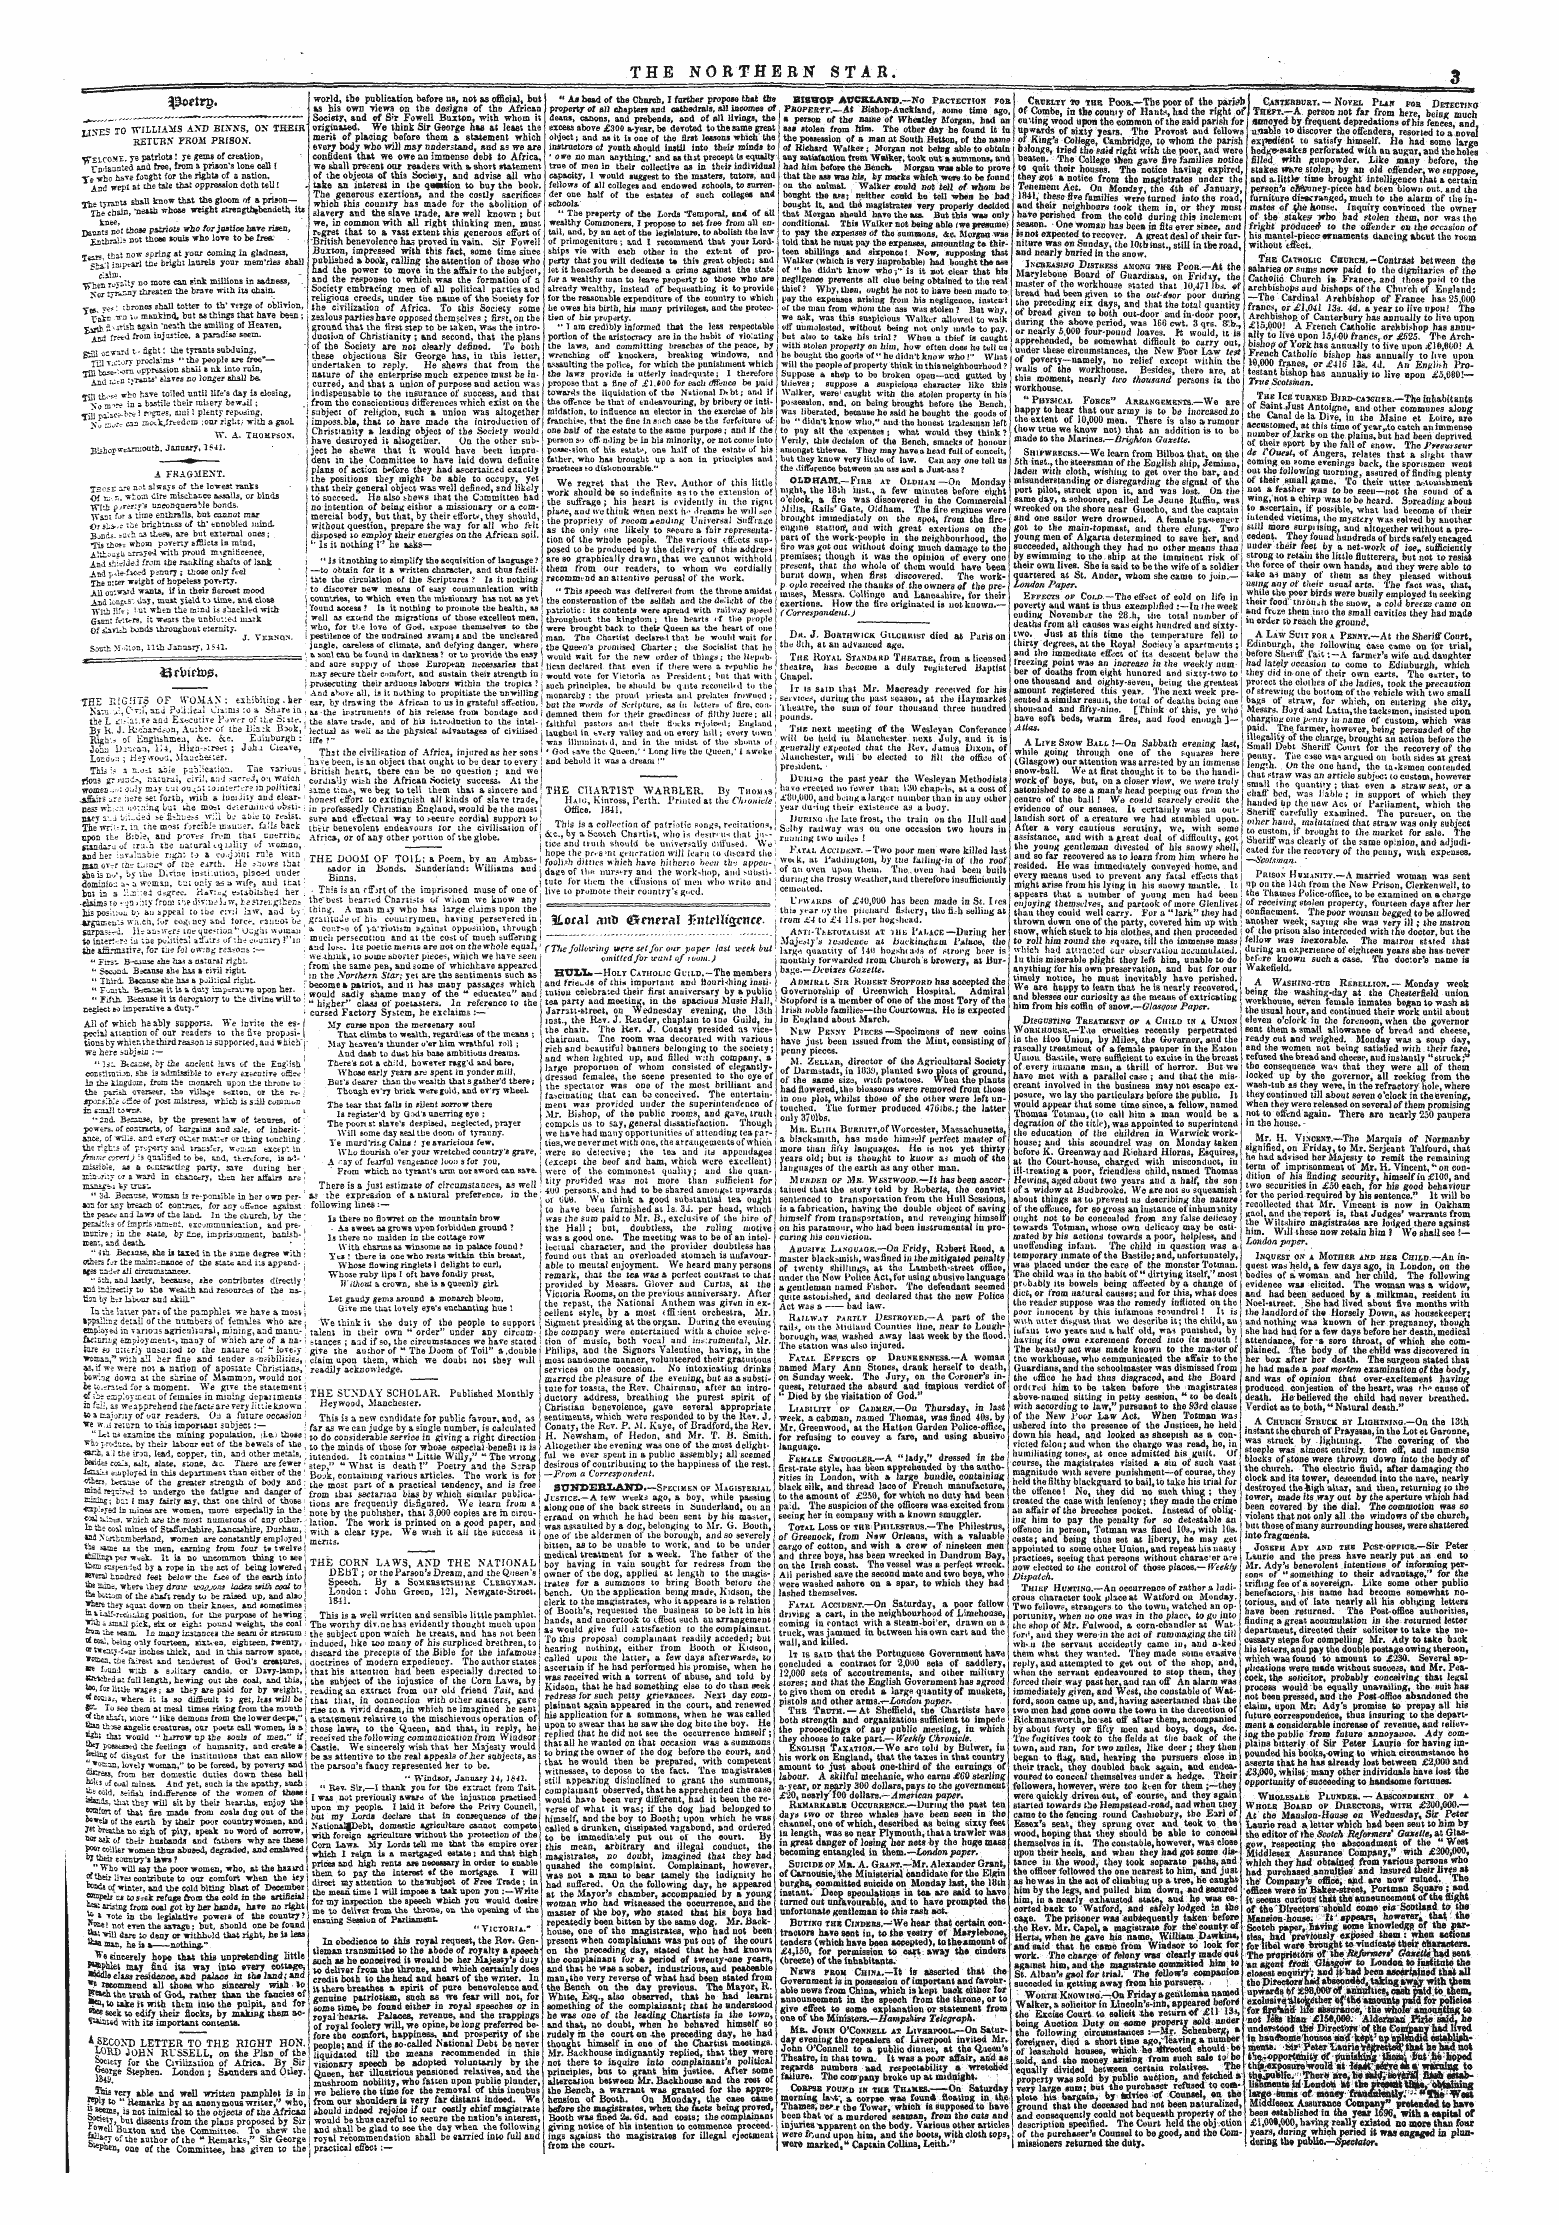 Northern Star (1837-1852): jS F Y, 5th edition: 3